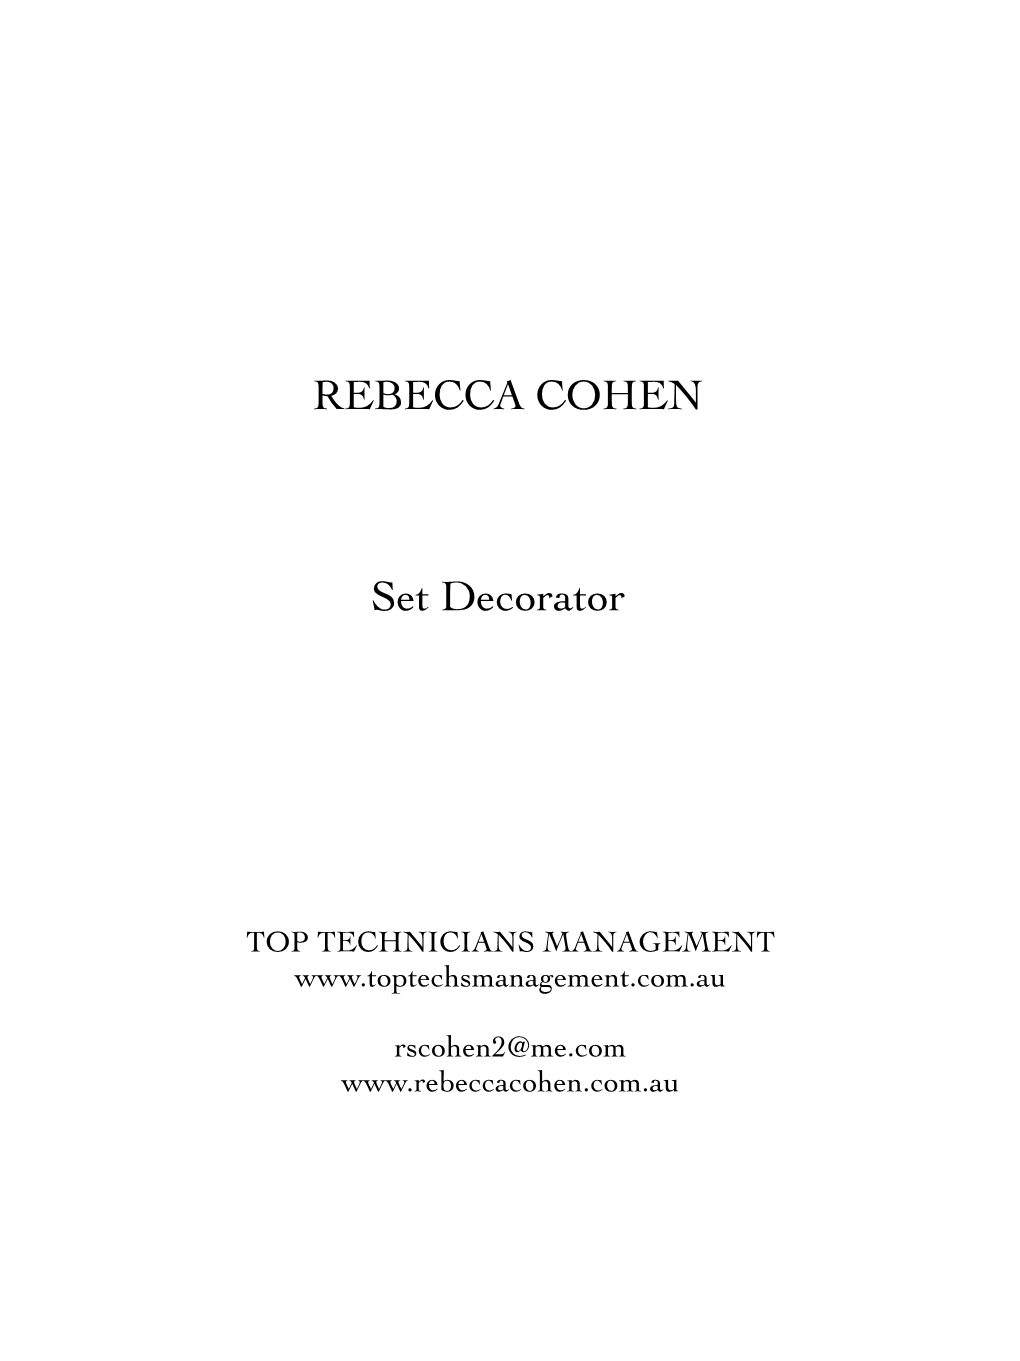 Rebecca Cohen CV 2017